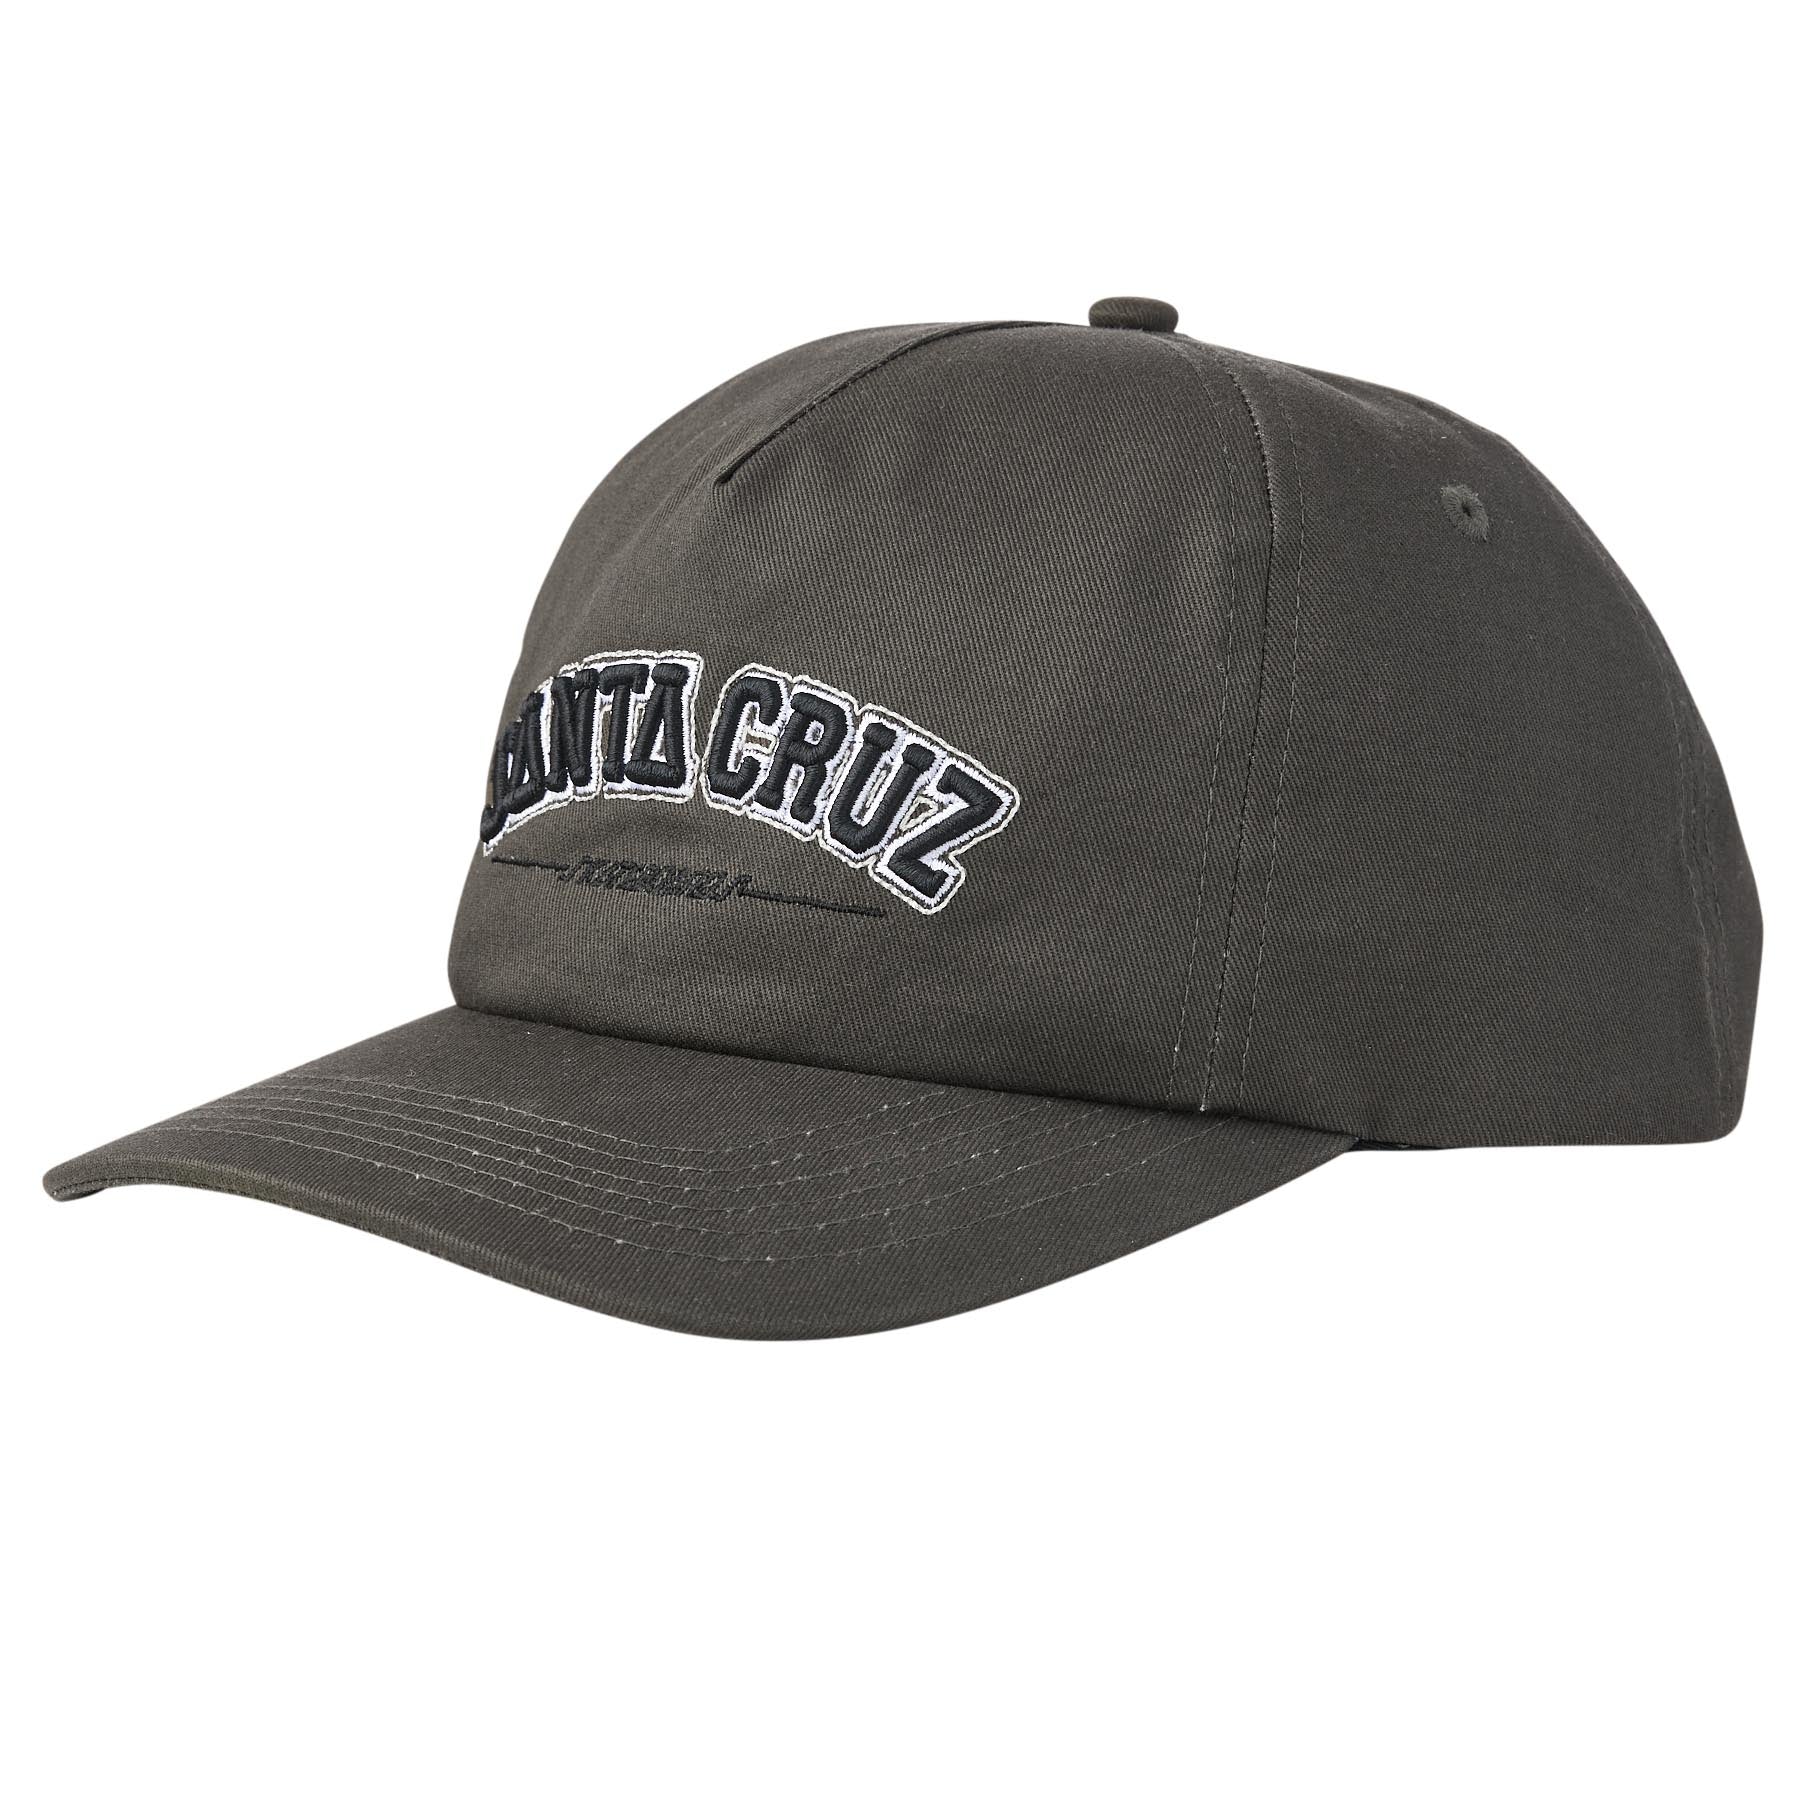 Collegiate Unstructured |Skate Hats | Santa Cruz